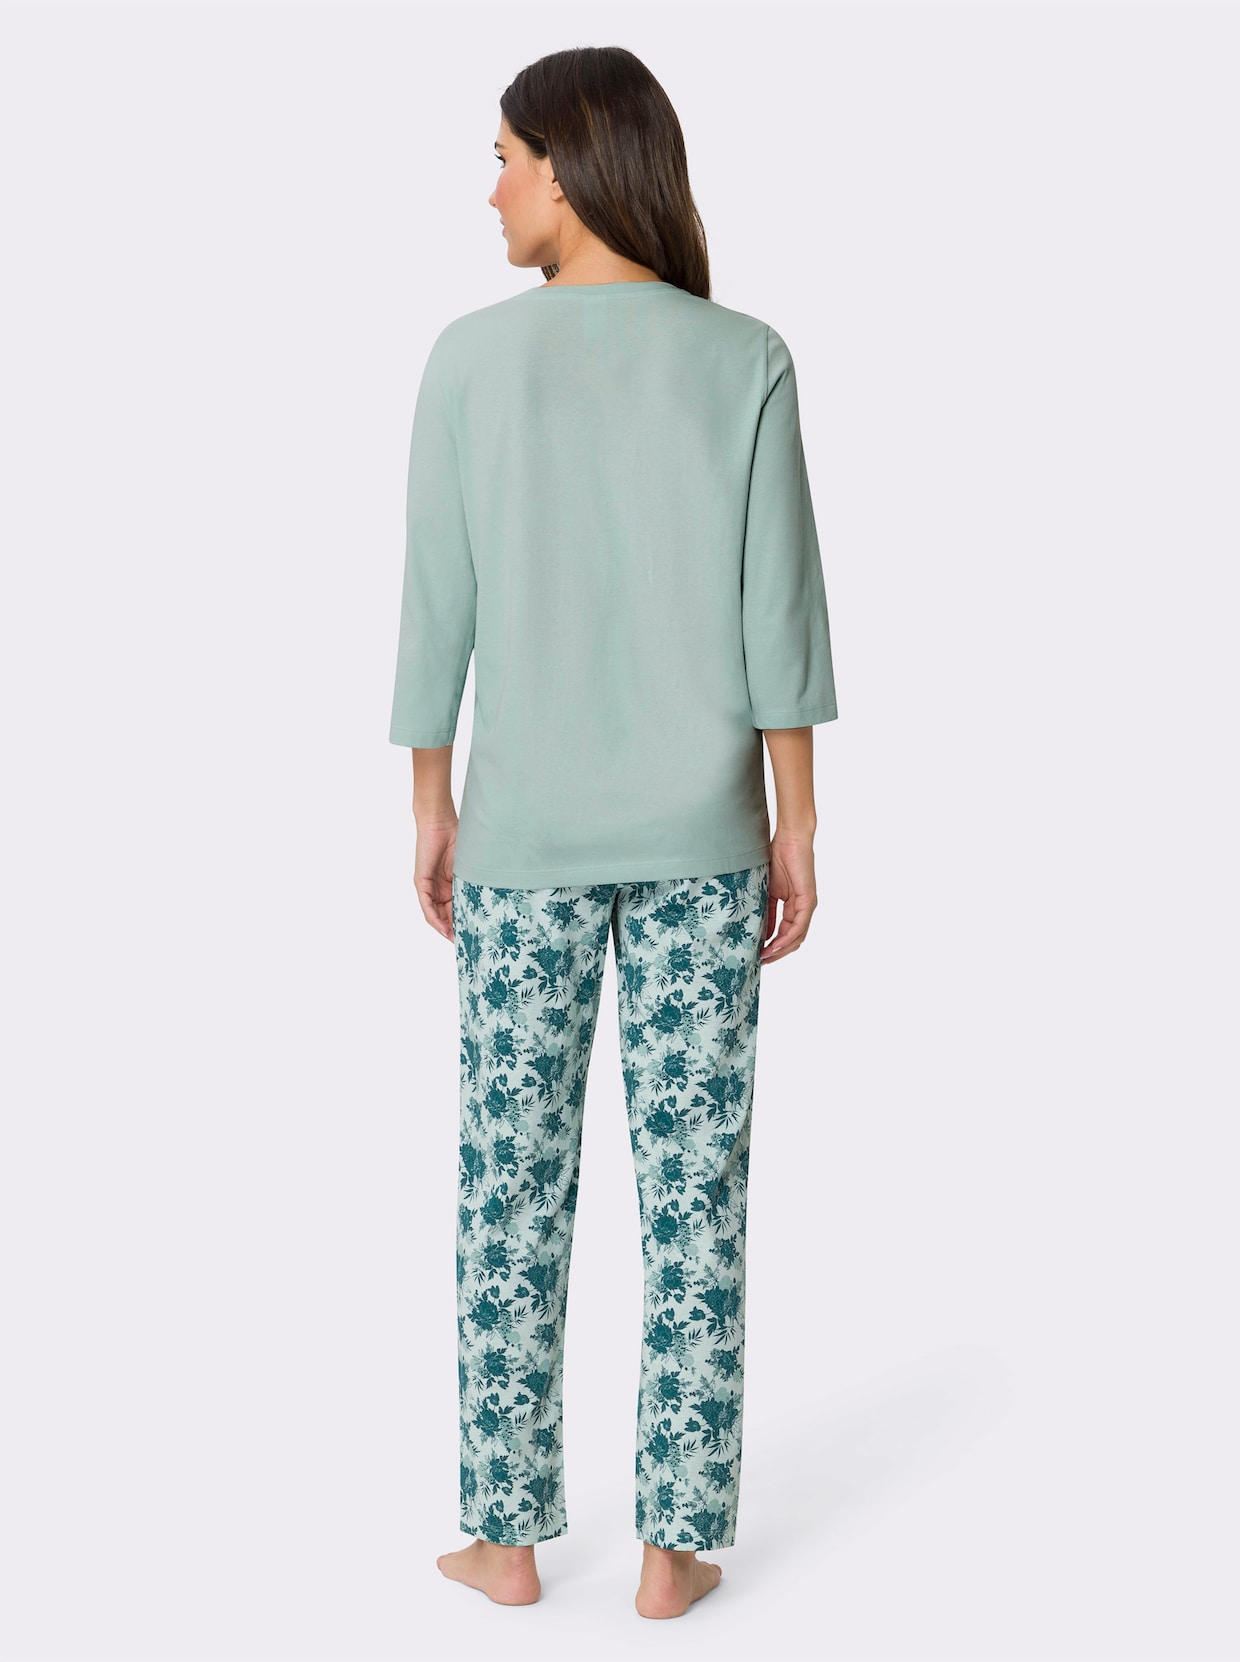 Pyjama - zacht mint/petrol bedrukt